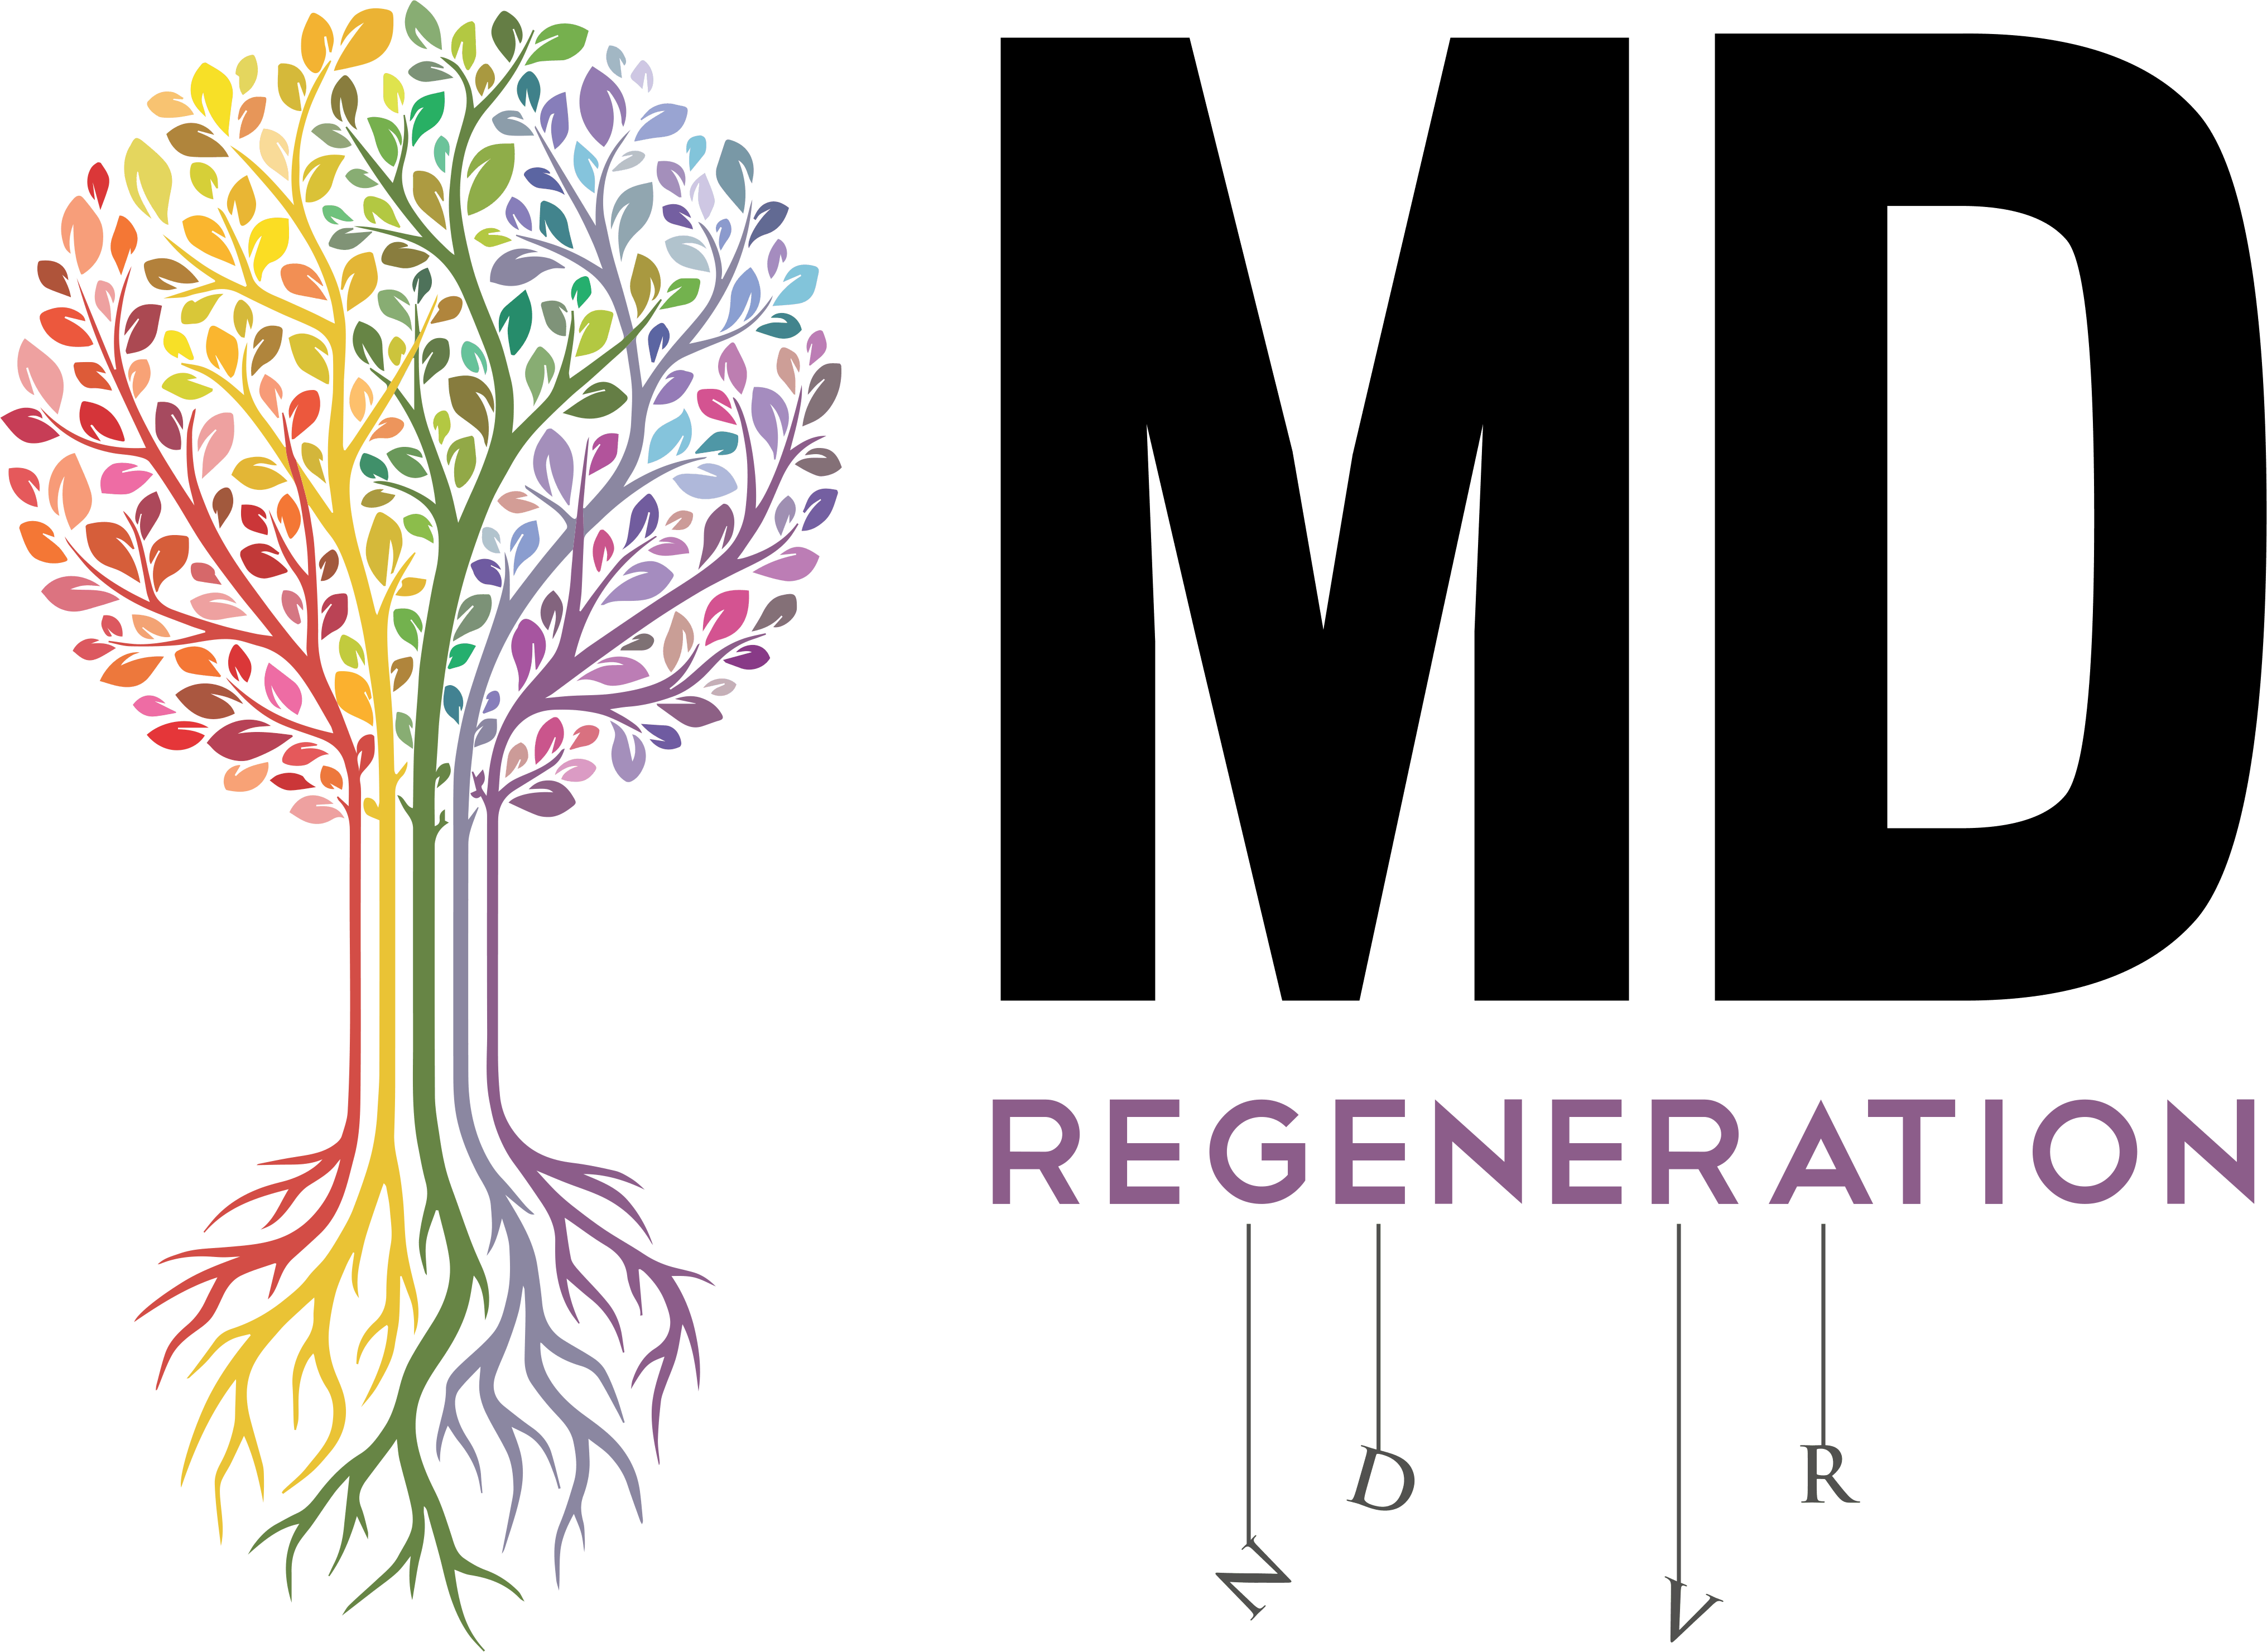 MD Regeneration - Medical Marijuana Doctors - Cannabizme.com